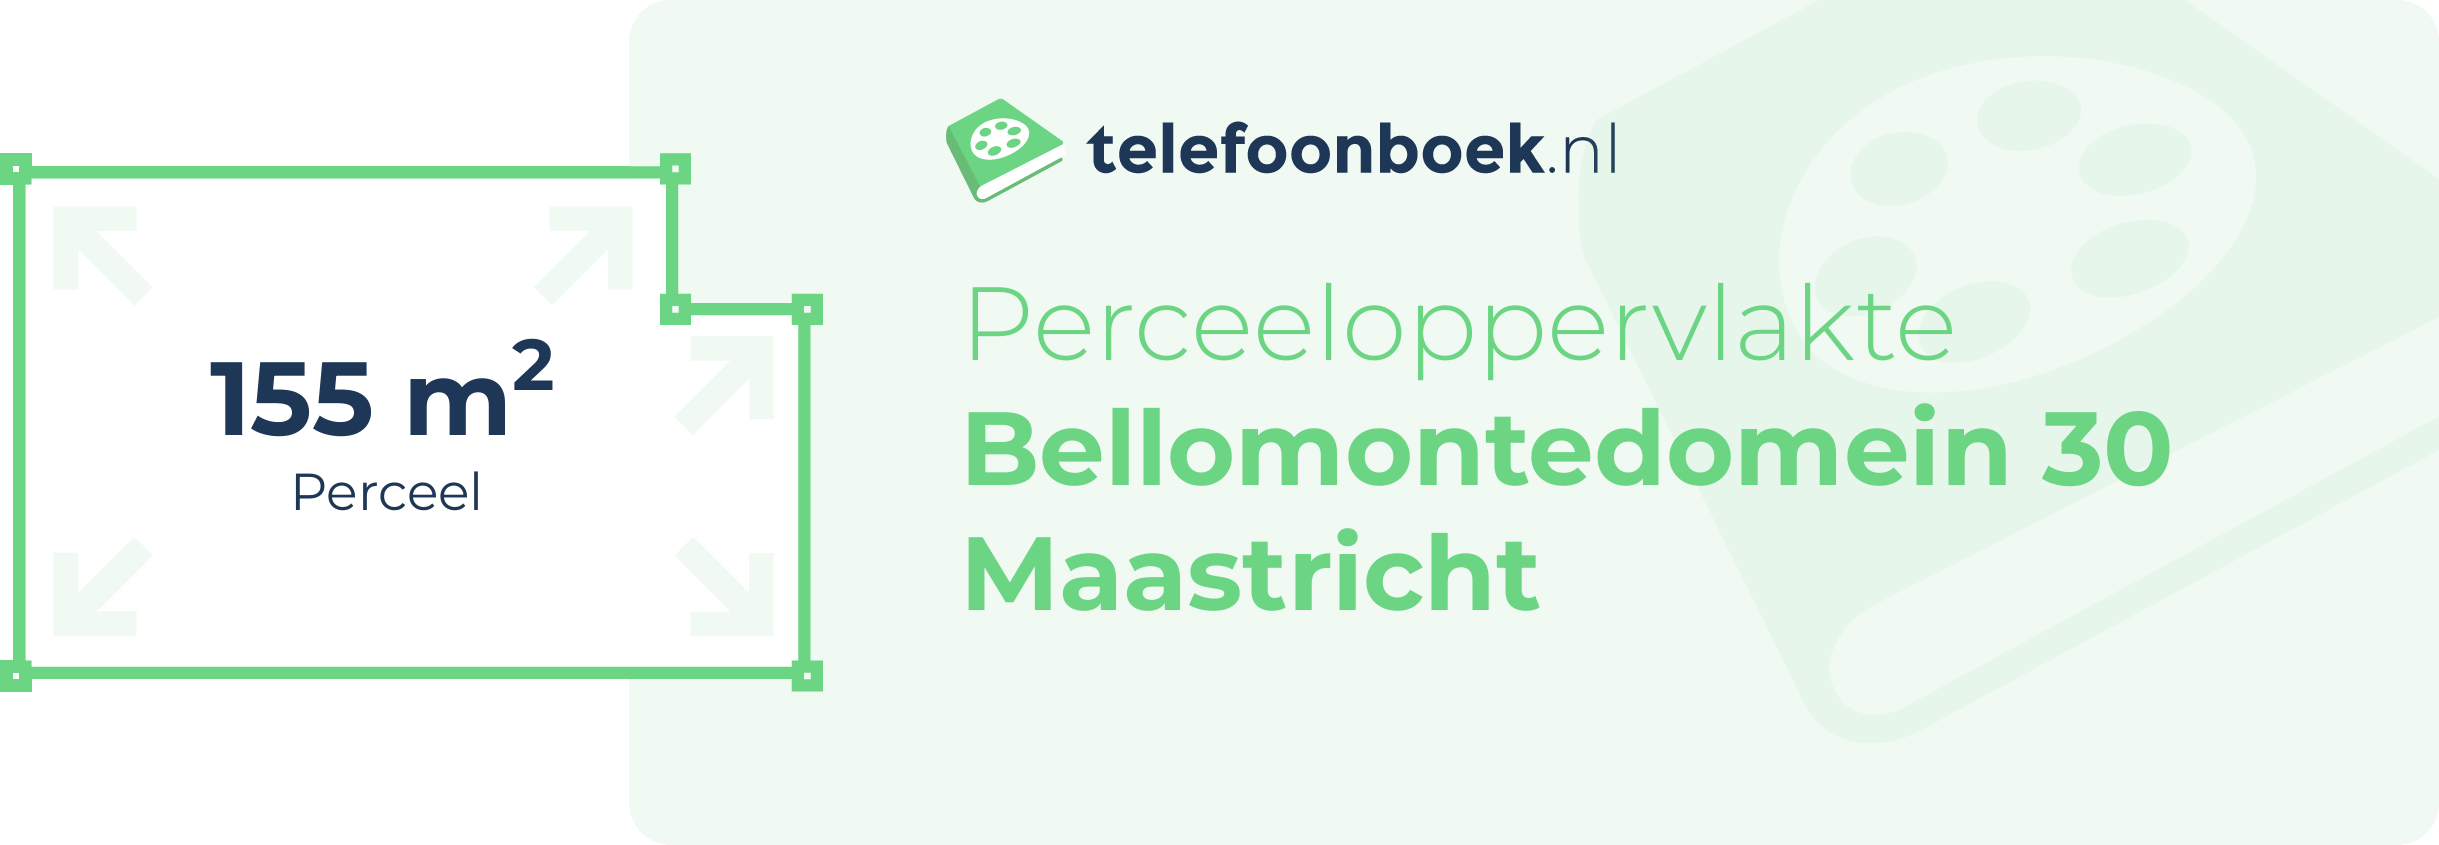 Perceeloppervlakte Bellomontedomein 30 Maastricht